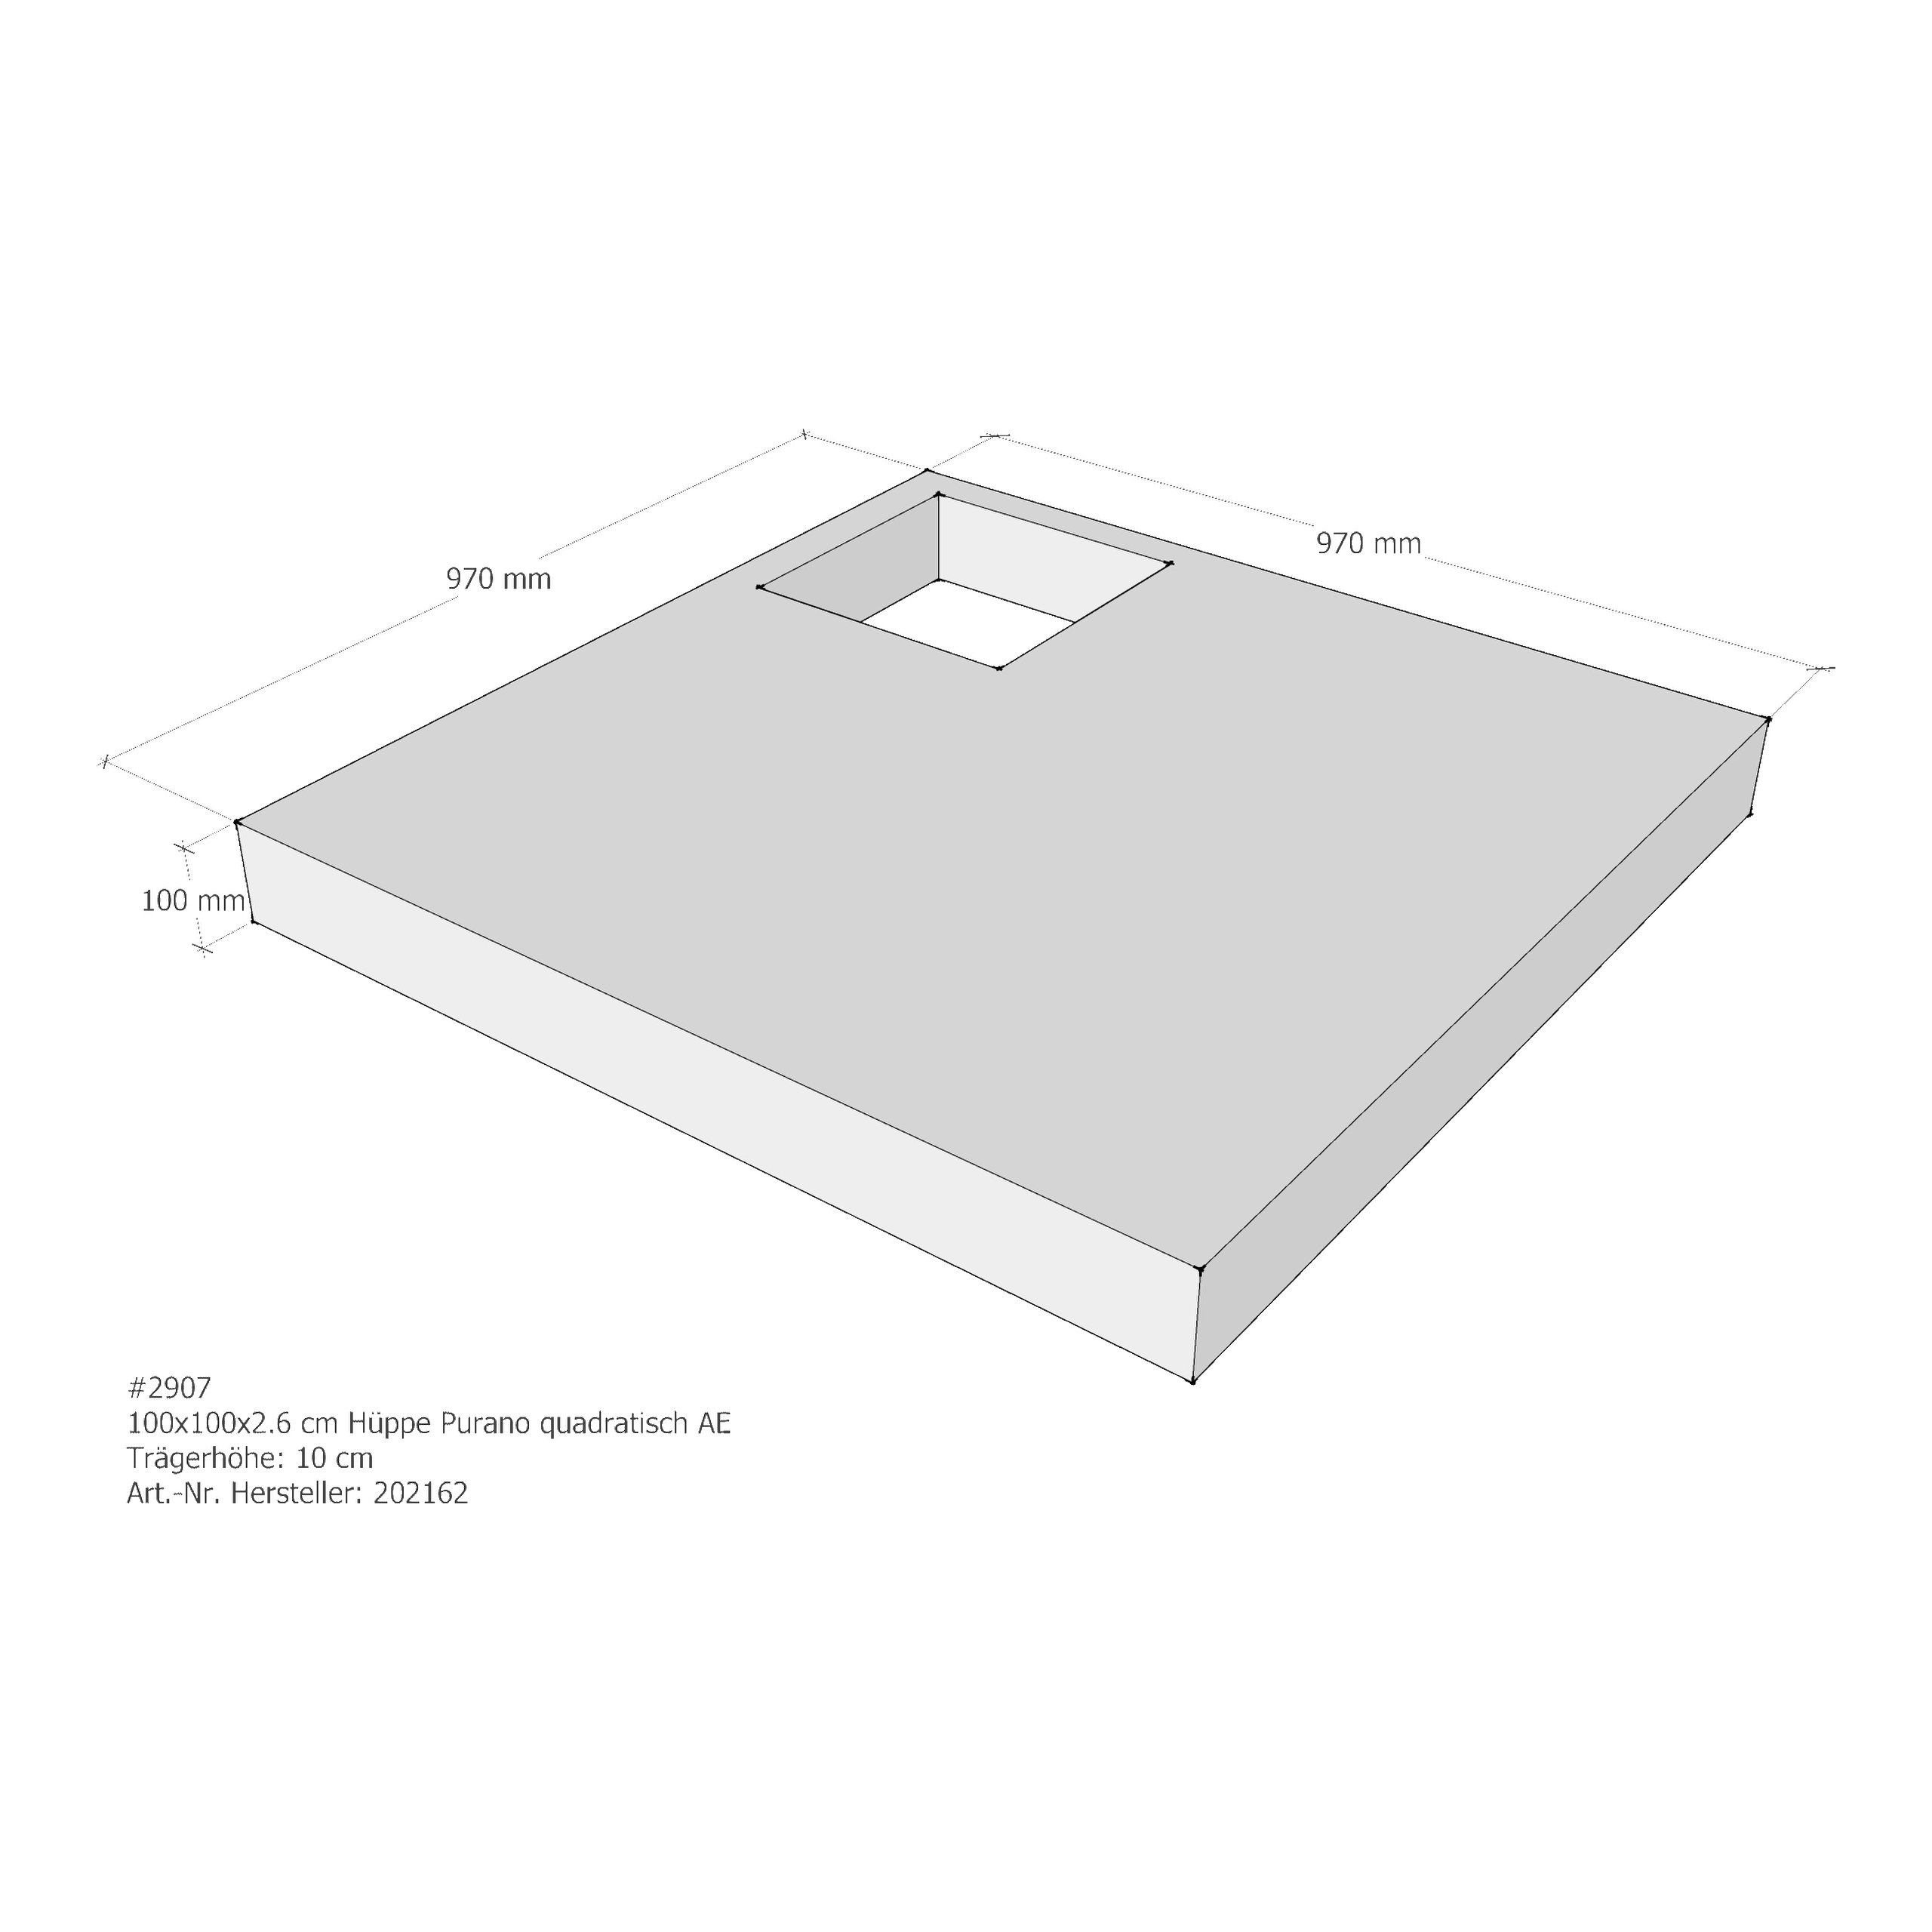 Duschwannenträger Hüppe Purano 100x100x2,6 cm quadratisch AE